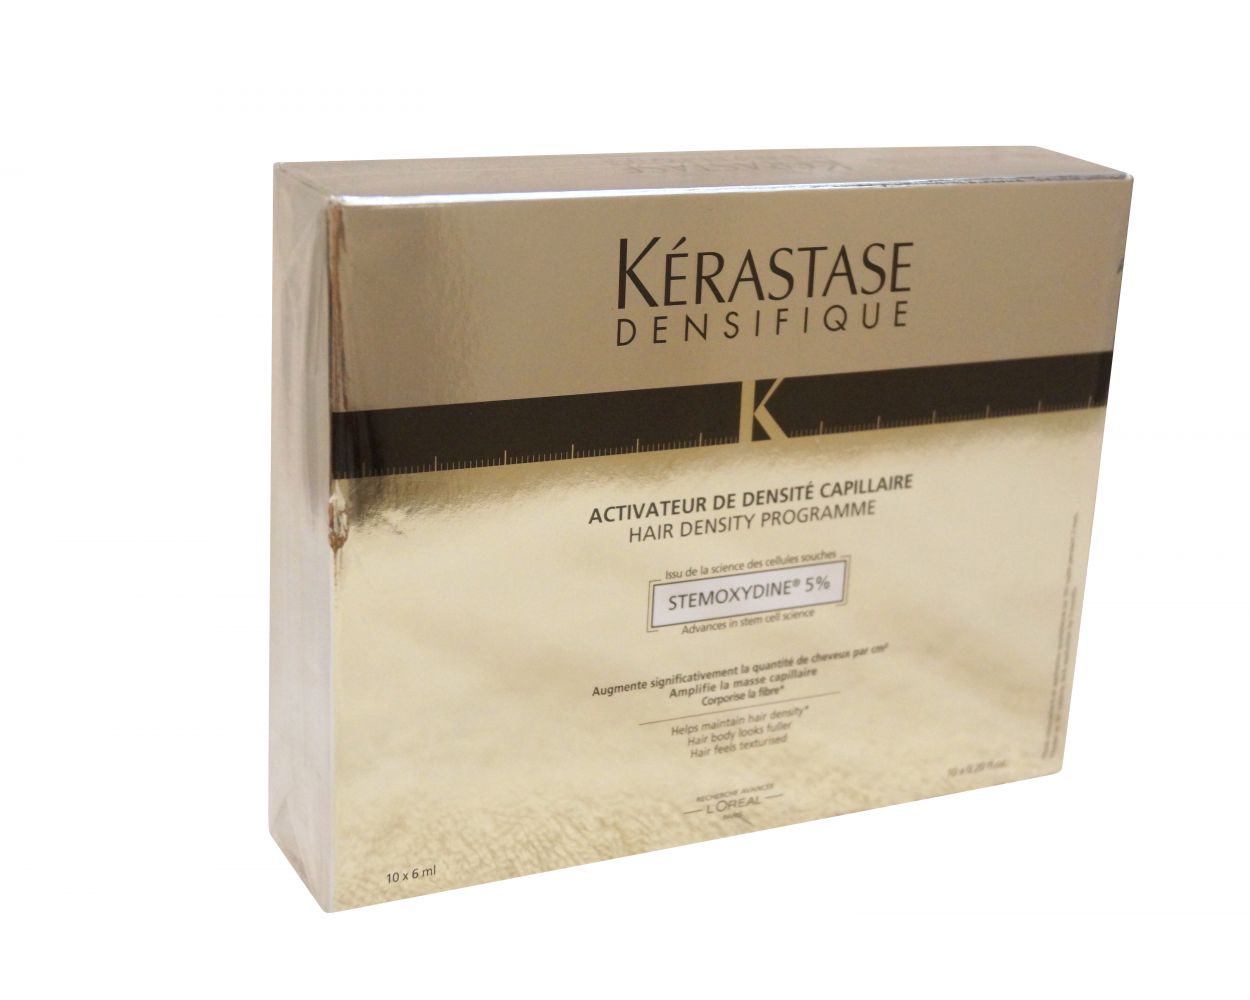 Densifique Hair Density Programme Stemoxydine 5% Anti Hair Loss | Conditioner Beautyvice.com